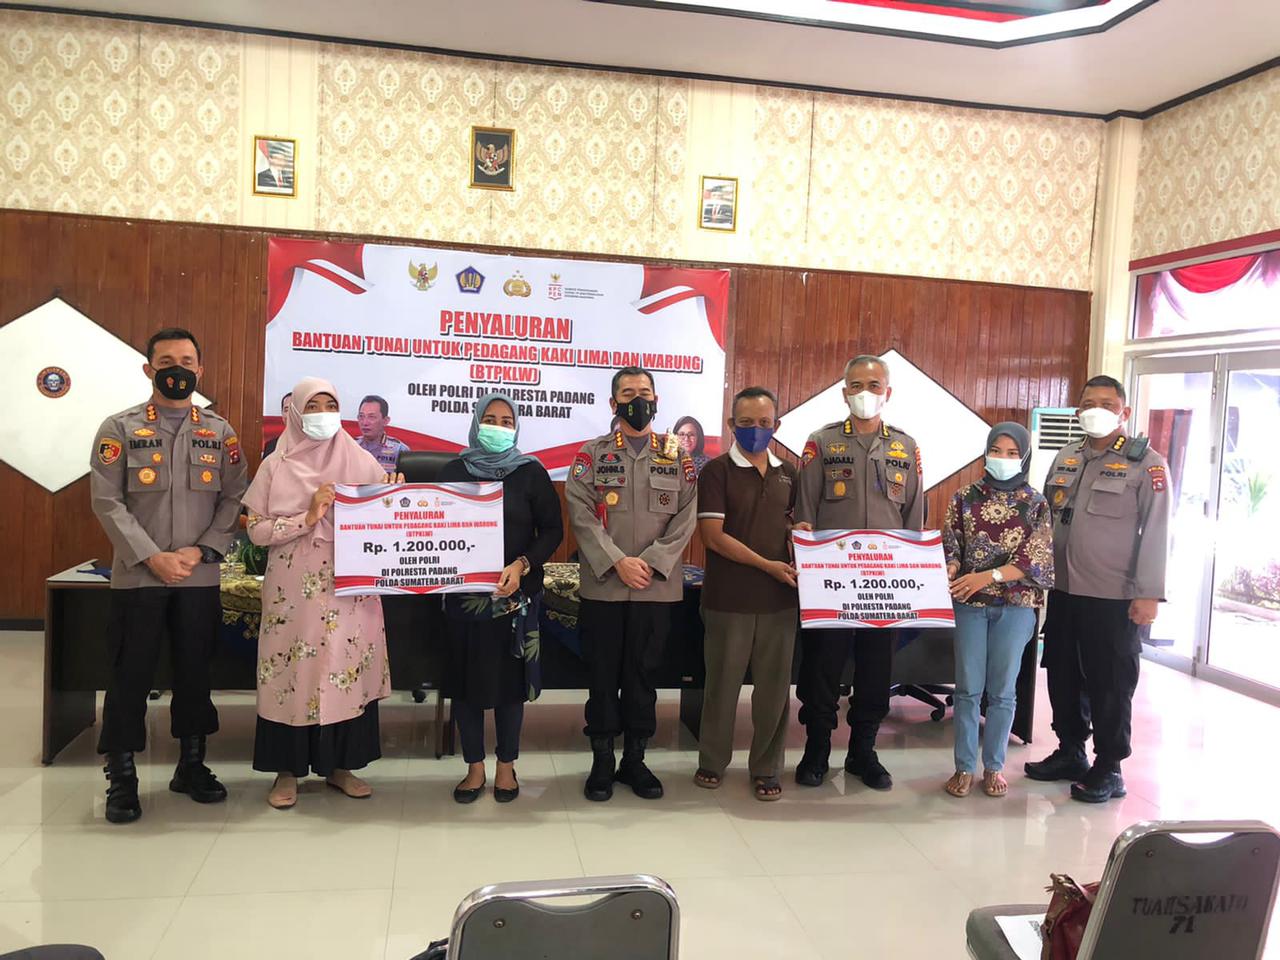 Polda Sumbar Salurkan Bantuan dana BTPKLW Tahap I untuk Pelaku UMKM  TNS - Kepolisian Daerah Sumatera Barat (Polda Sumbar) menyalurkan bantuan dana Bantuan Tunai Pedagang Kaki Lima dan Warung (BTPKLW) tahap I tahun 2021, untuk pelaku Usaha Mikro Kecil Menengah (UMKM).  Penyaluran BTPKLW ini, diberikan oleh Karoops Polda Sumbar Kombes Pol Djajuli, S.Ik, Dirbinmas Polda Sumbar Kombes Pol Drs. Johni Soeroto, Kabid Keu Polda Sumbar Kombes Pol Toto Fajar, MM, dan Kapolresta Padang Kombes Pol Imran Amir, S.Ik, Kamis (23/9) di Ruang Tuah Sakato, Polresta Padang.  "Bantuan tersebut sejumlah Rp. 240.000.000,- untuk 200 pelaku usaha. Dan awalnya ini disalurkan kepada 126 pelaku usaha sejumlah Rp. 151.200.000,-," kata Kabid Humas Polda Sumbar Kombes Pol Satake Bayu Setianto, S.Ik.   Untuk dana sisanya kata Kombes Pol Satake Bayu, pihaknya akan melakukan pendataan pelaku usaha lainnya sehingga bantuan dana tersebut tepat sasaran.   "Sehingga dapat membantu meringankan beban pelaku UMKM yang saat ini berpengaruh akibat pandemi Covid-19," pungkasnya.(*)